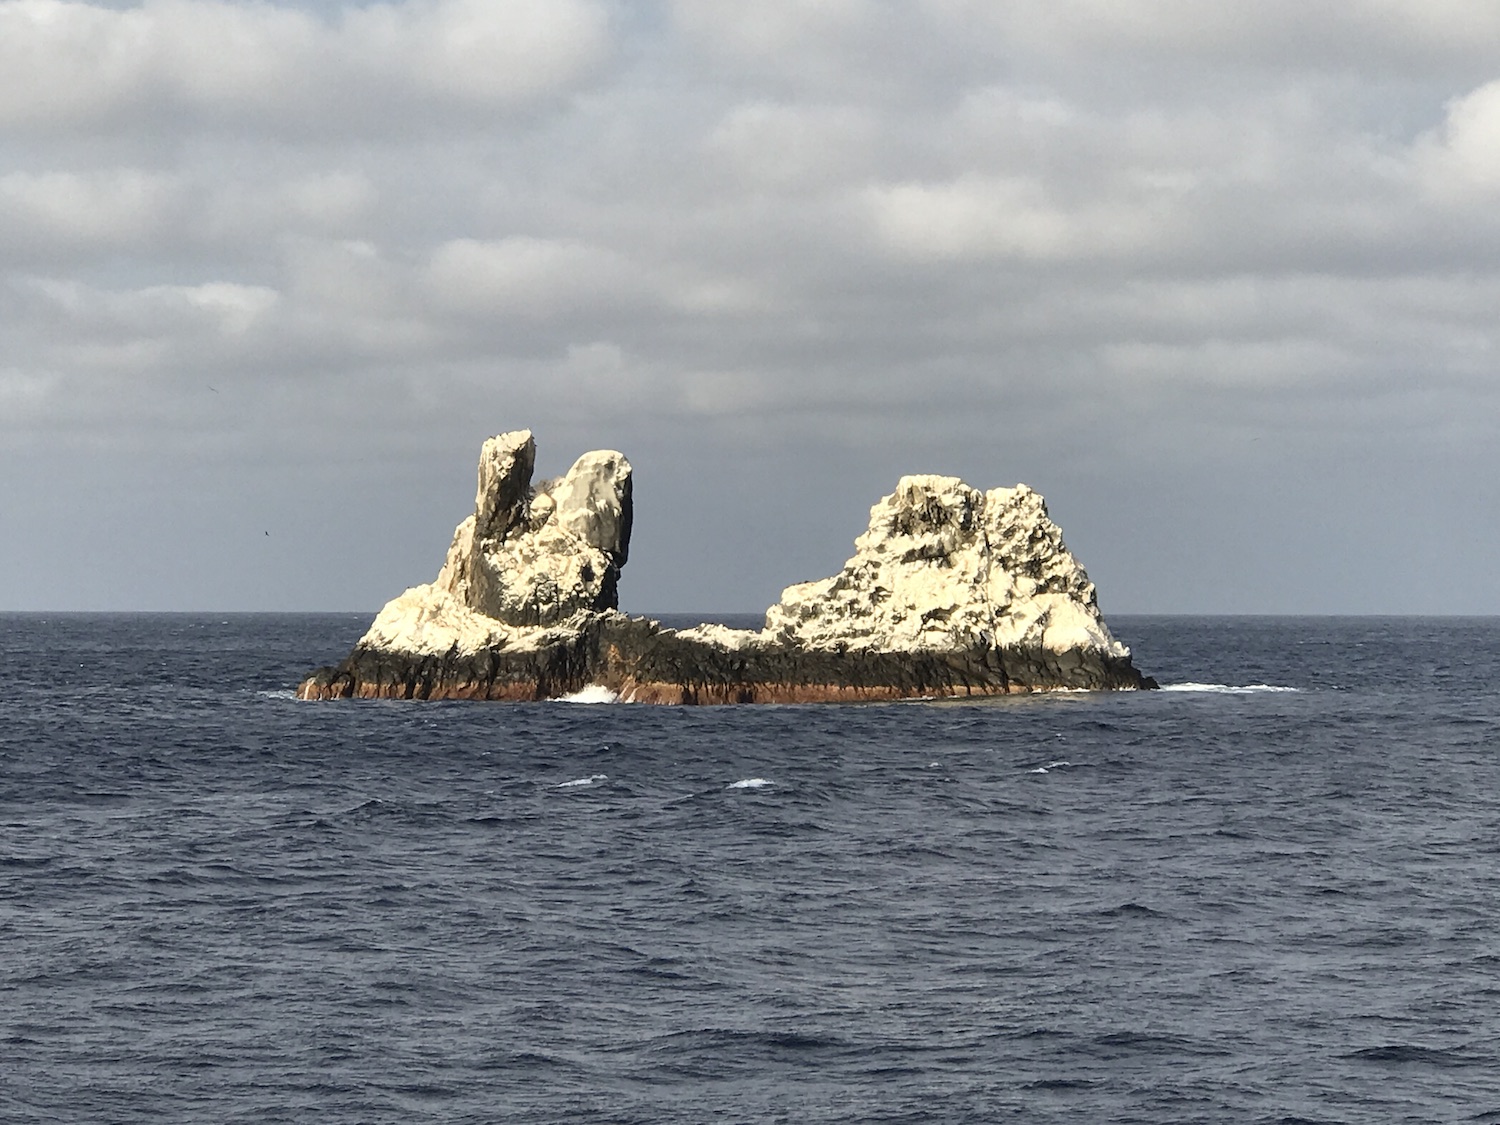 Roca Partida island (part of the Socorro Islands or Revillagigedo archipelago) emerging from the sea